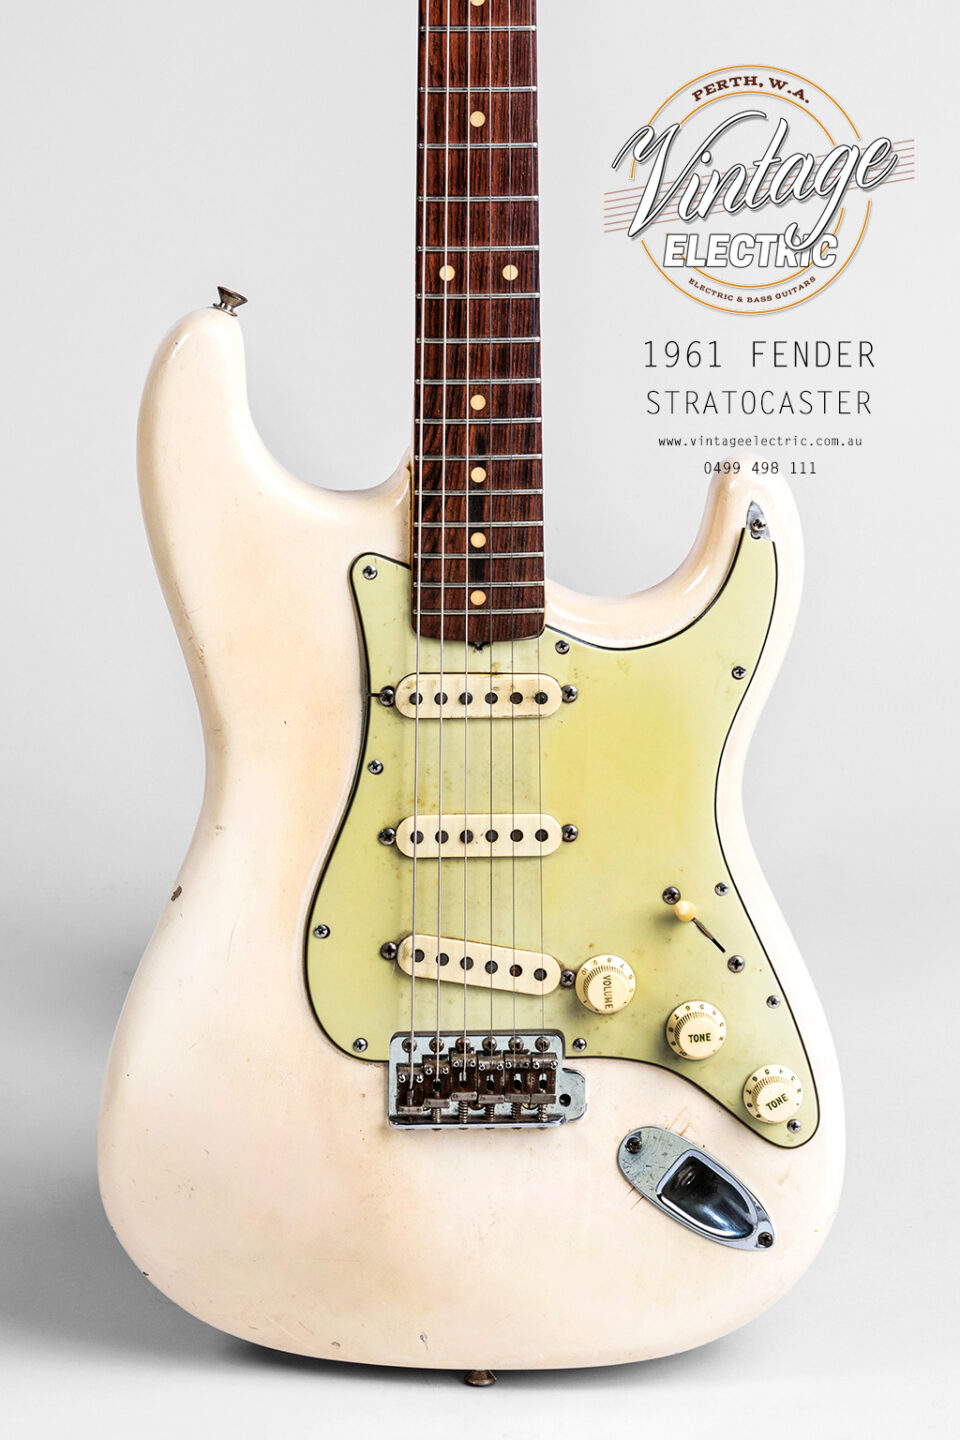 1961 Fender Stratocaster Body in Olympic White